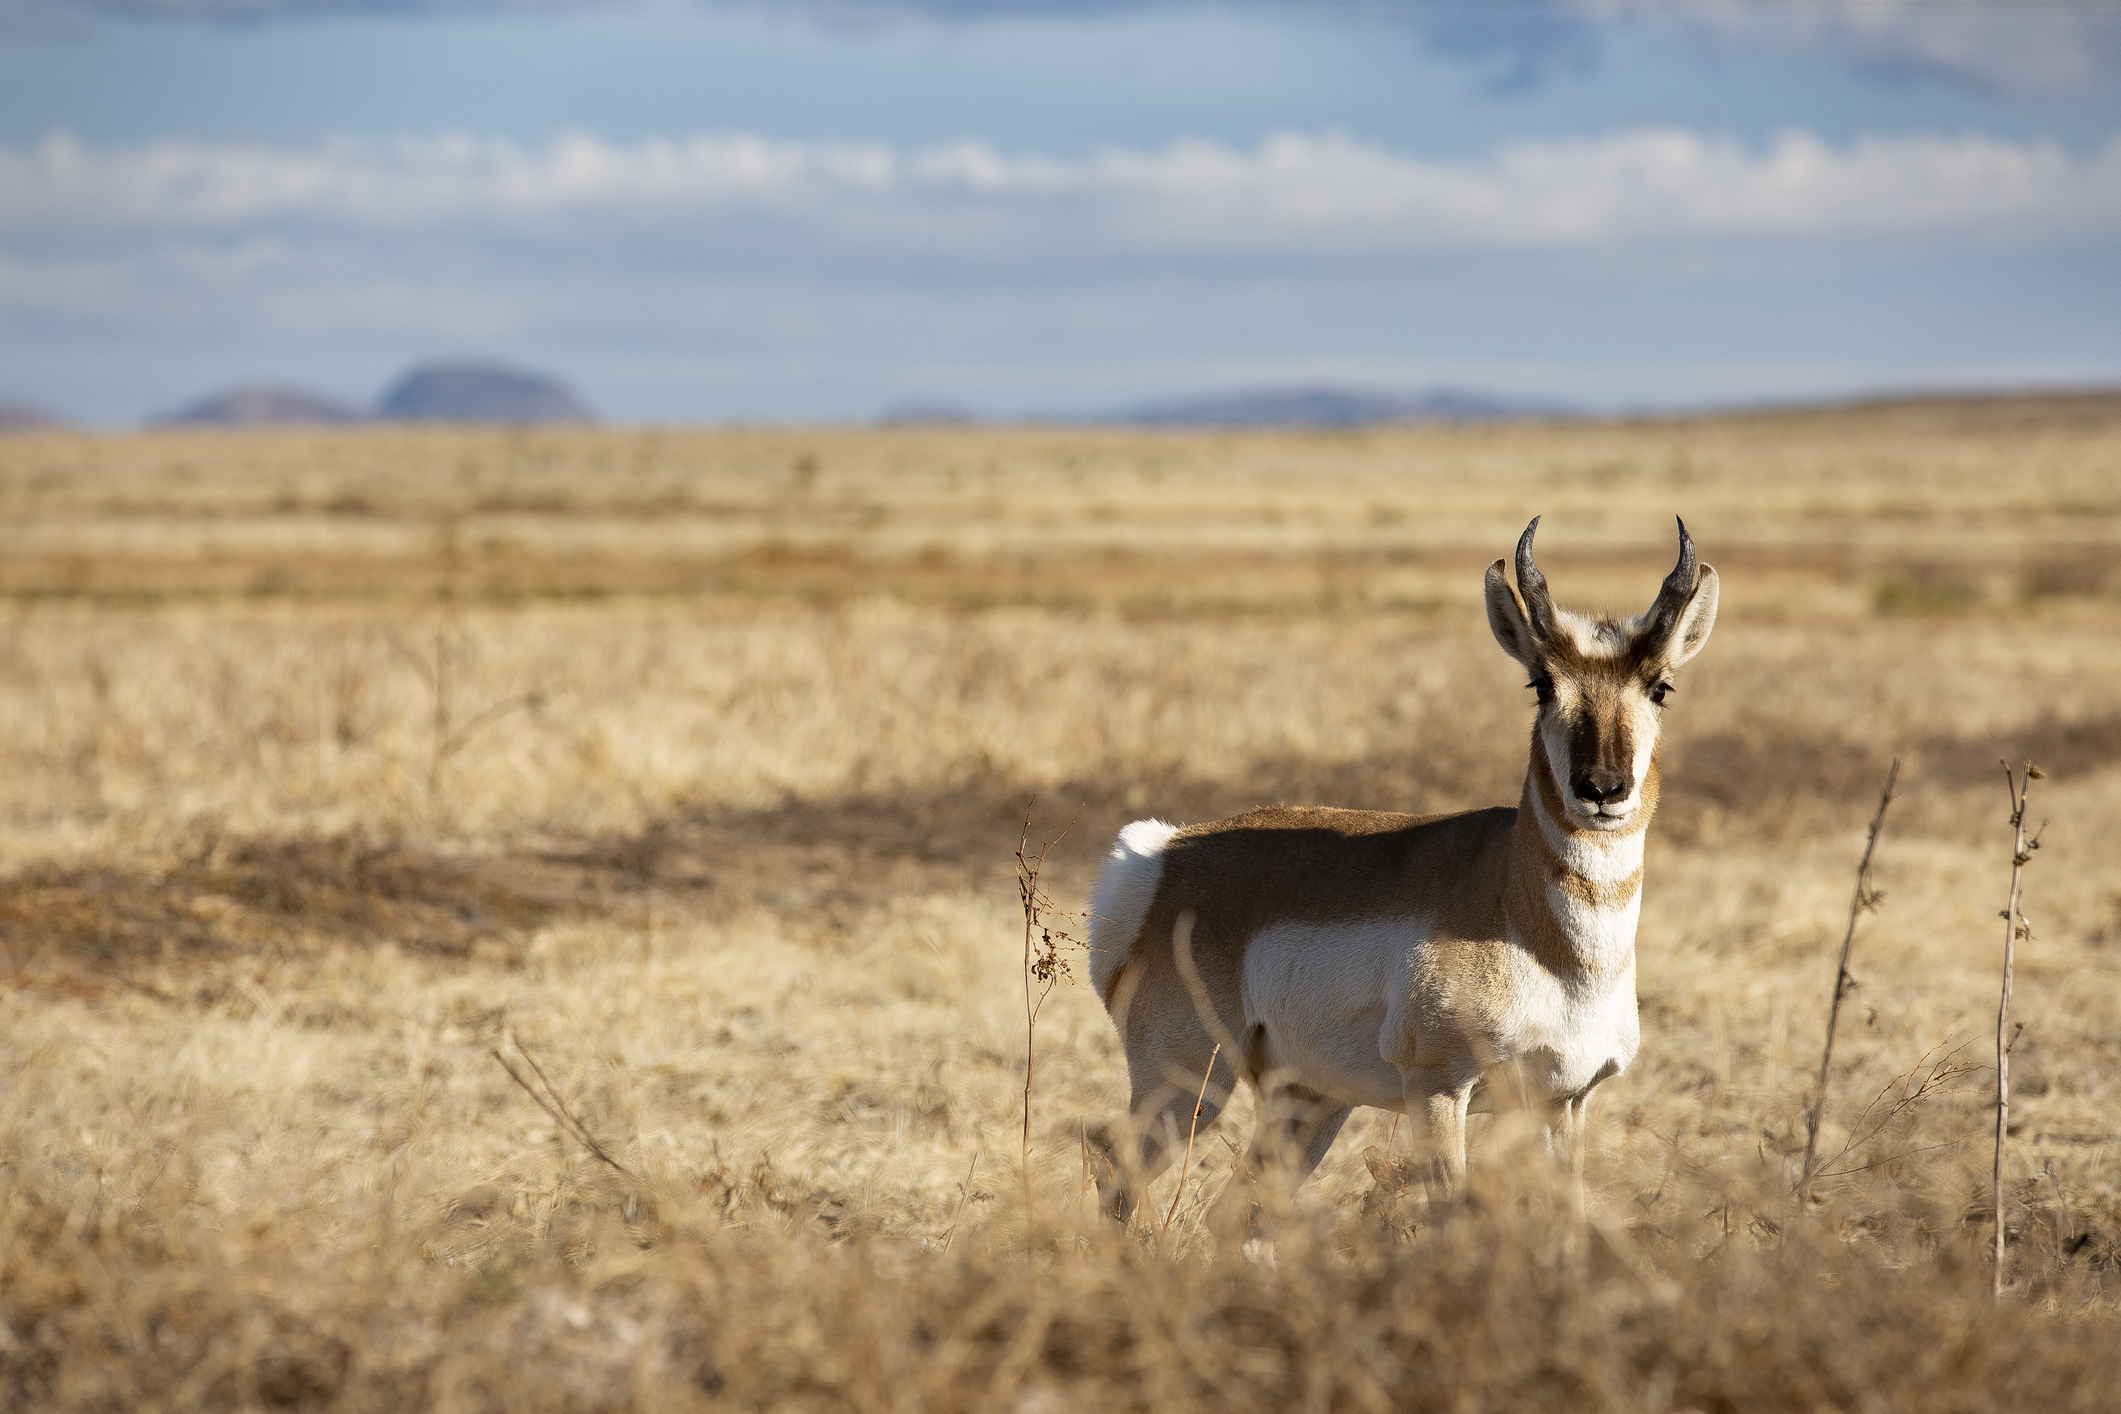 Antelope on the Range